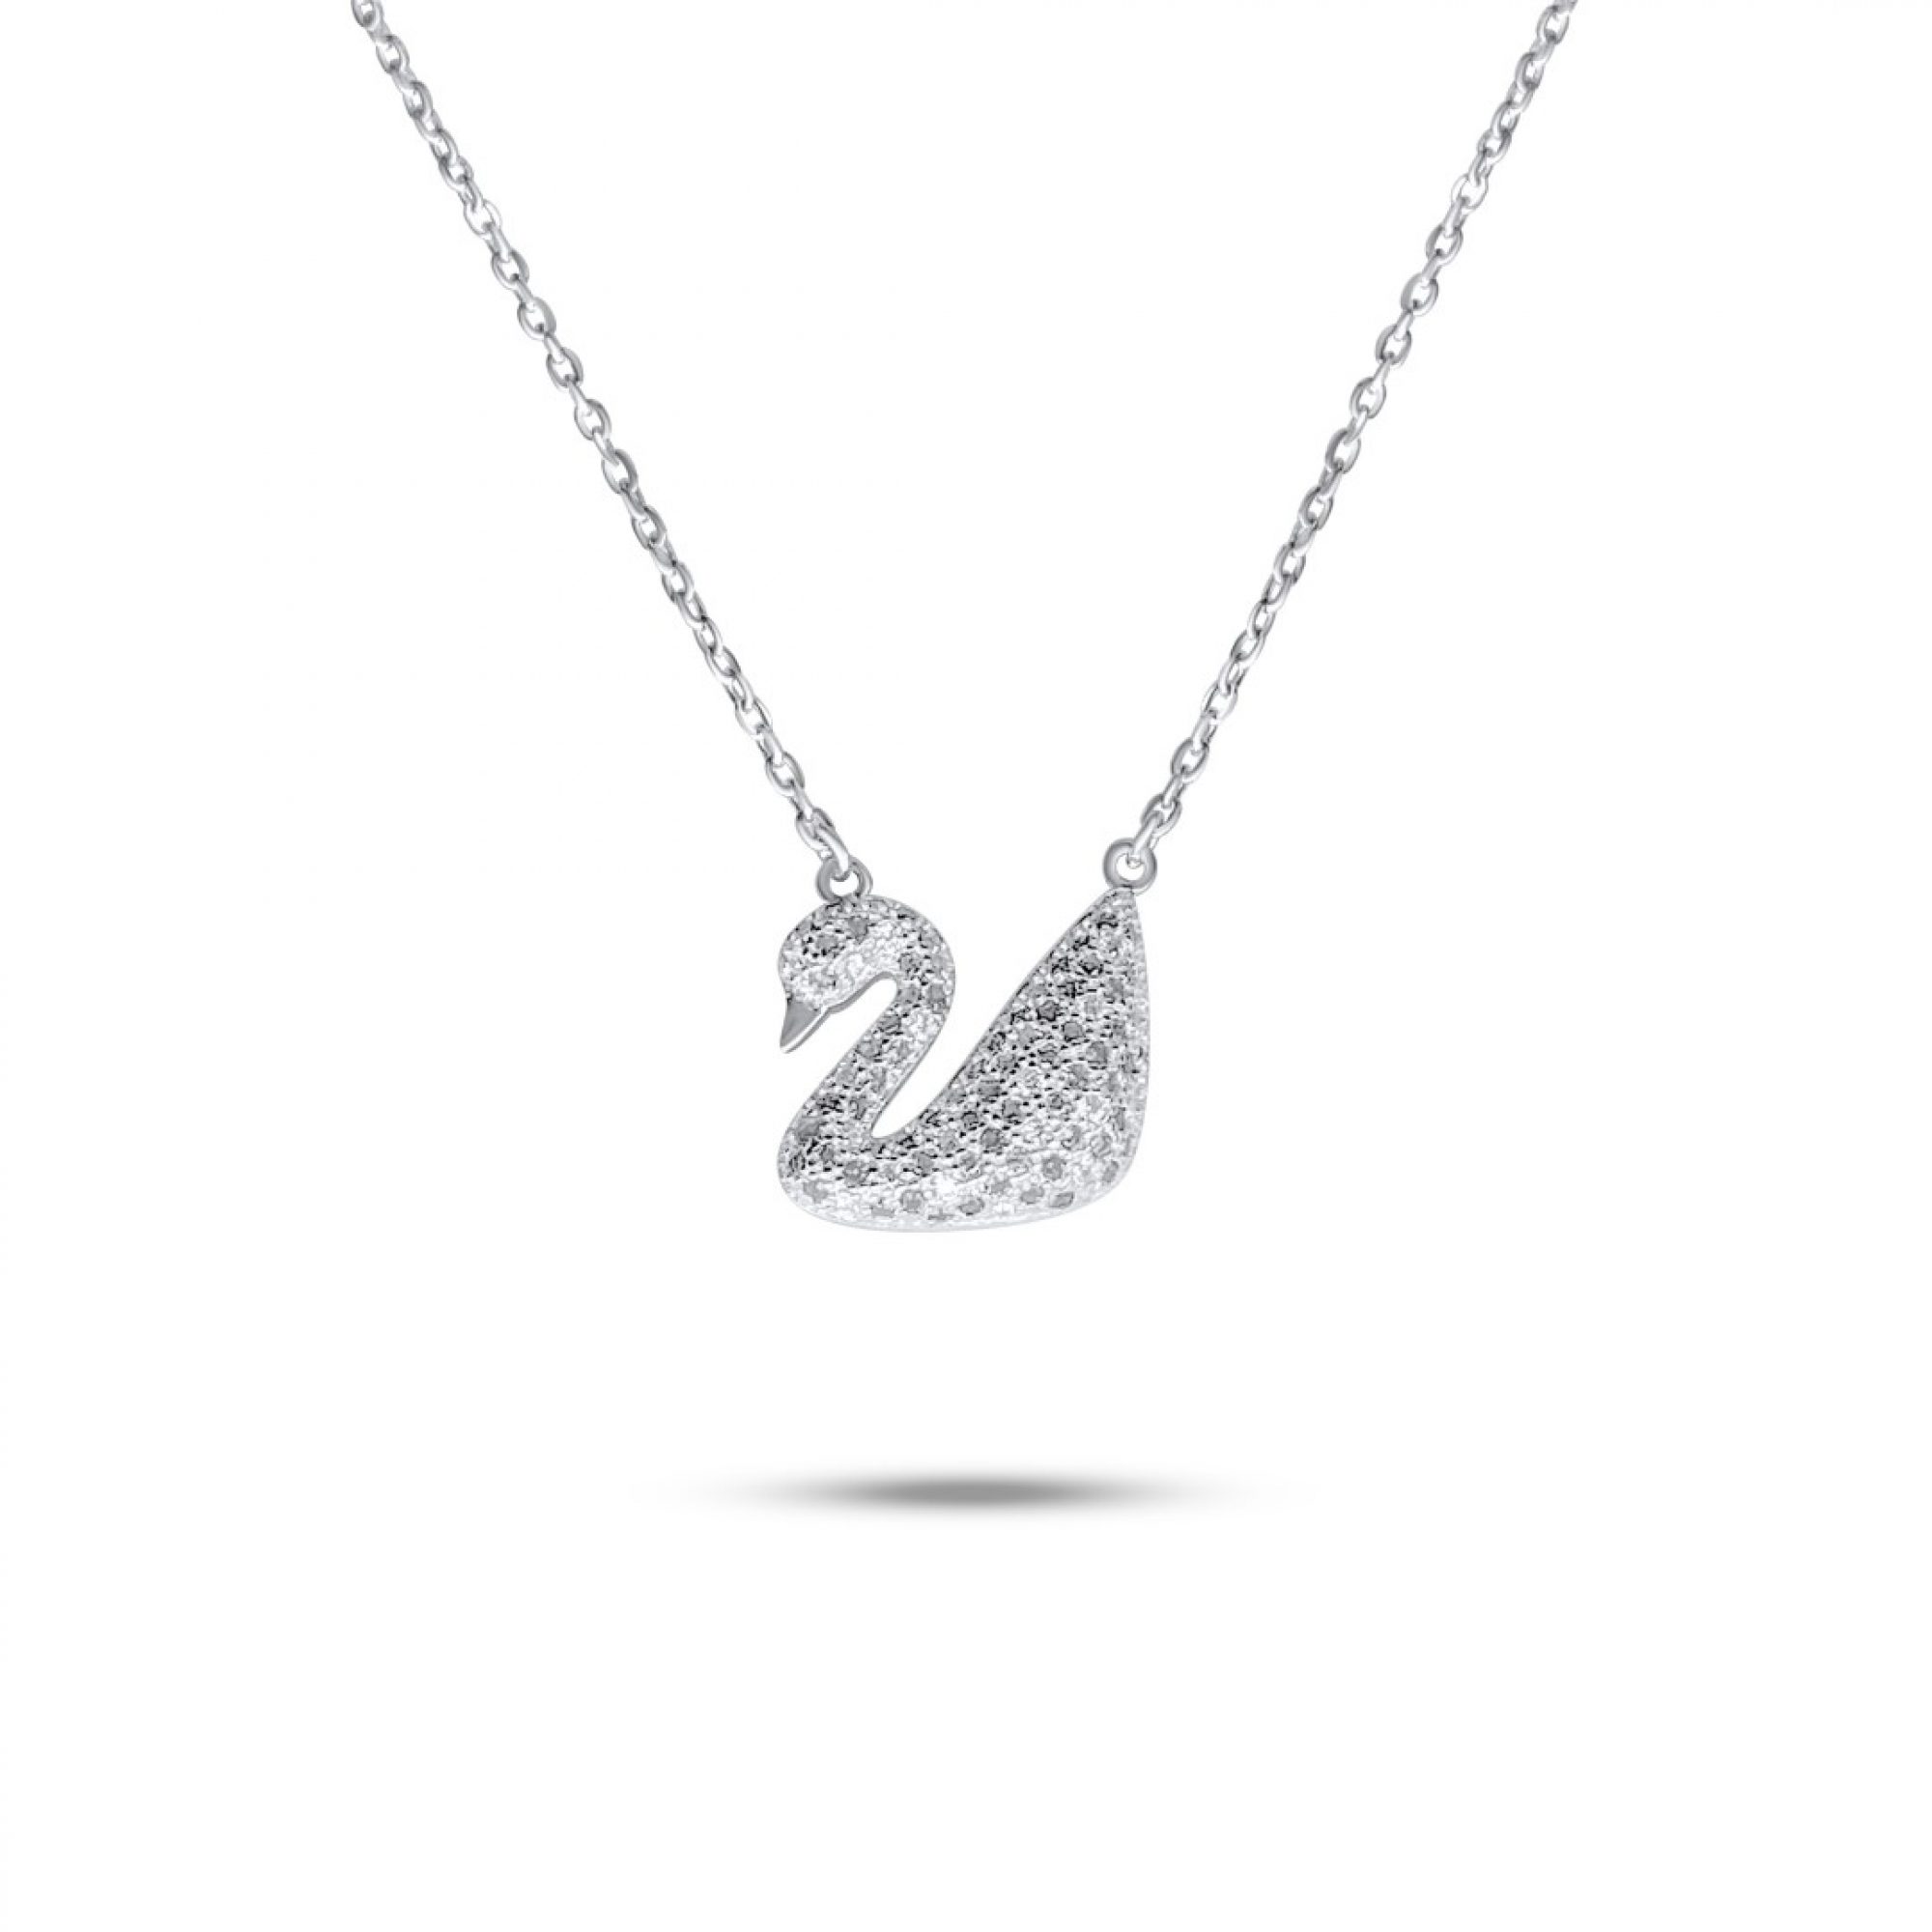 Swan necklace with zircon stones